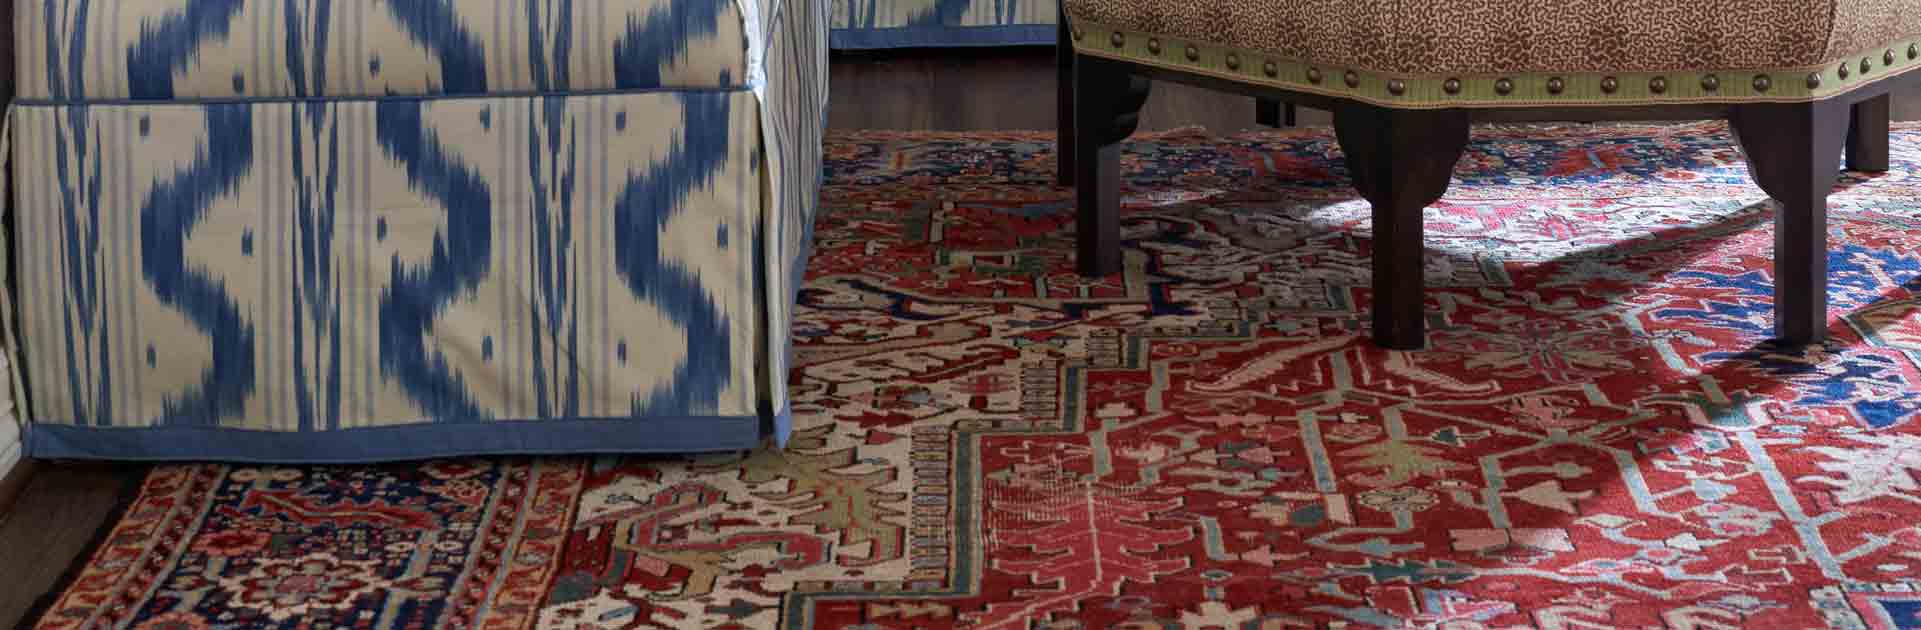 Persian Rugs Dallas Antique Iranian Vintage Carpets